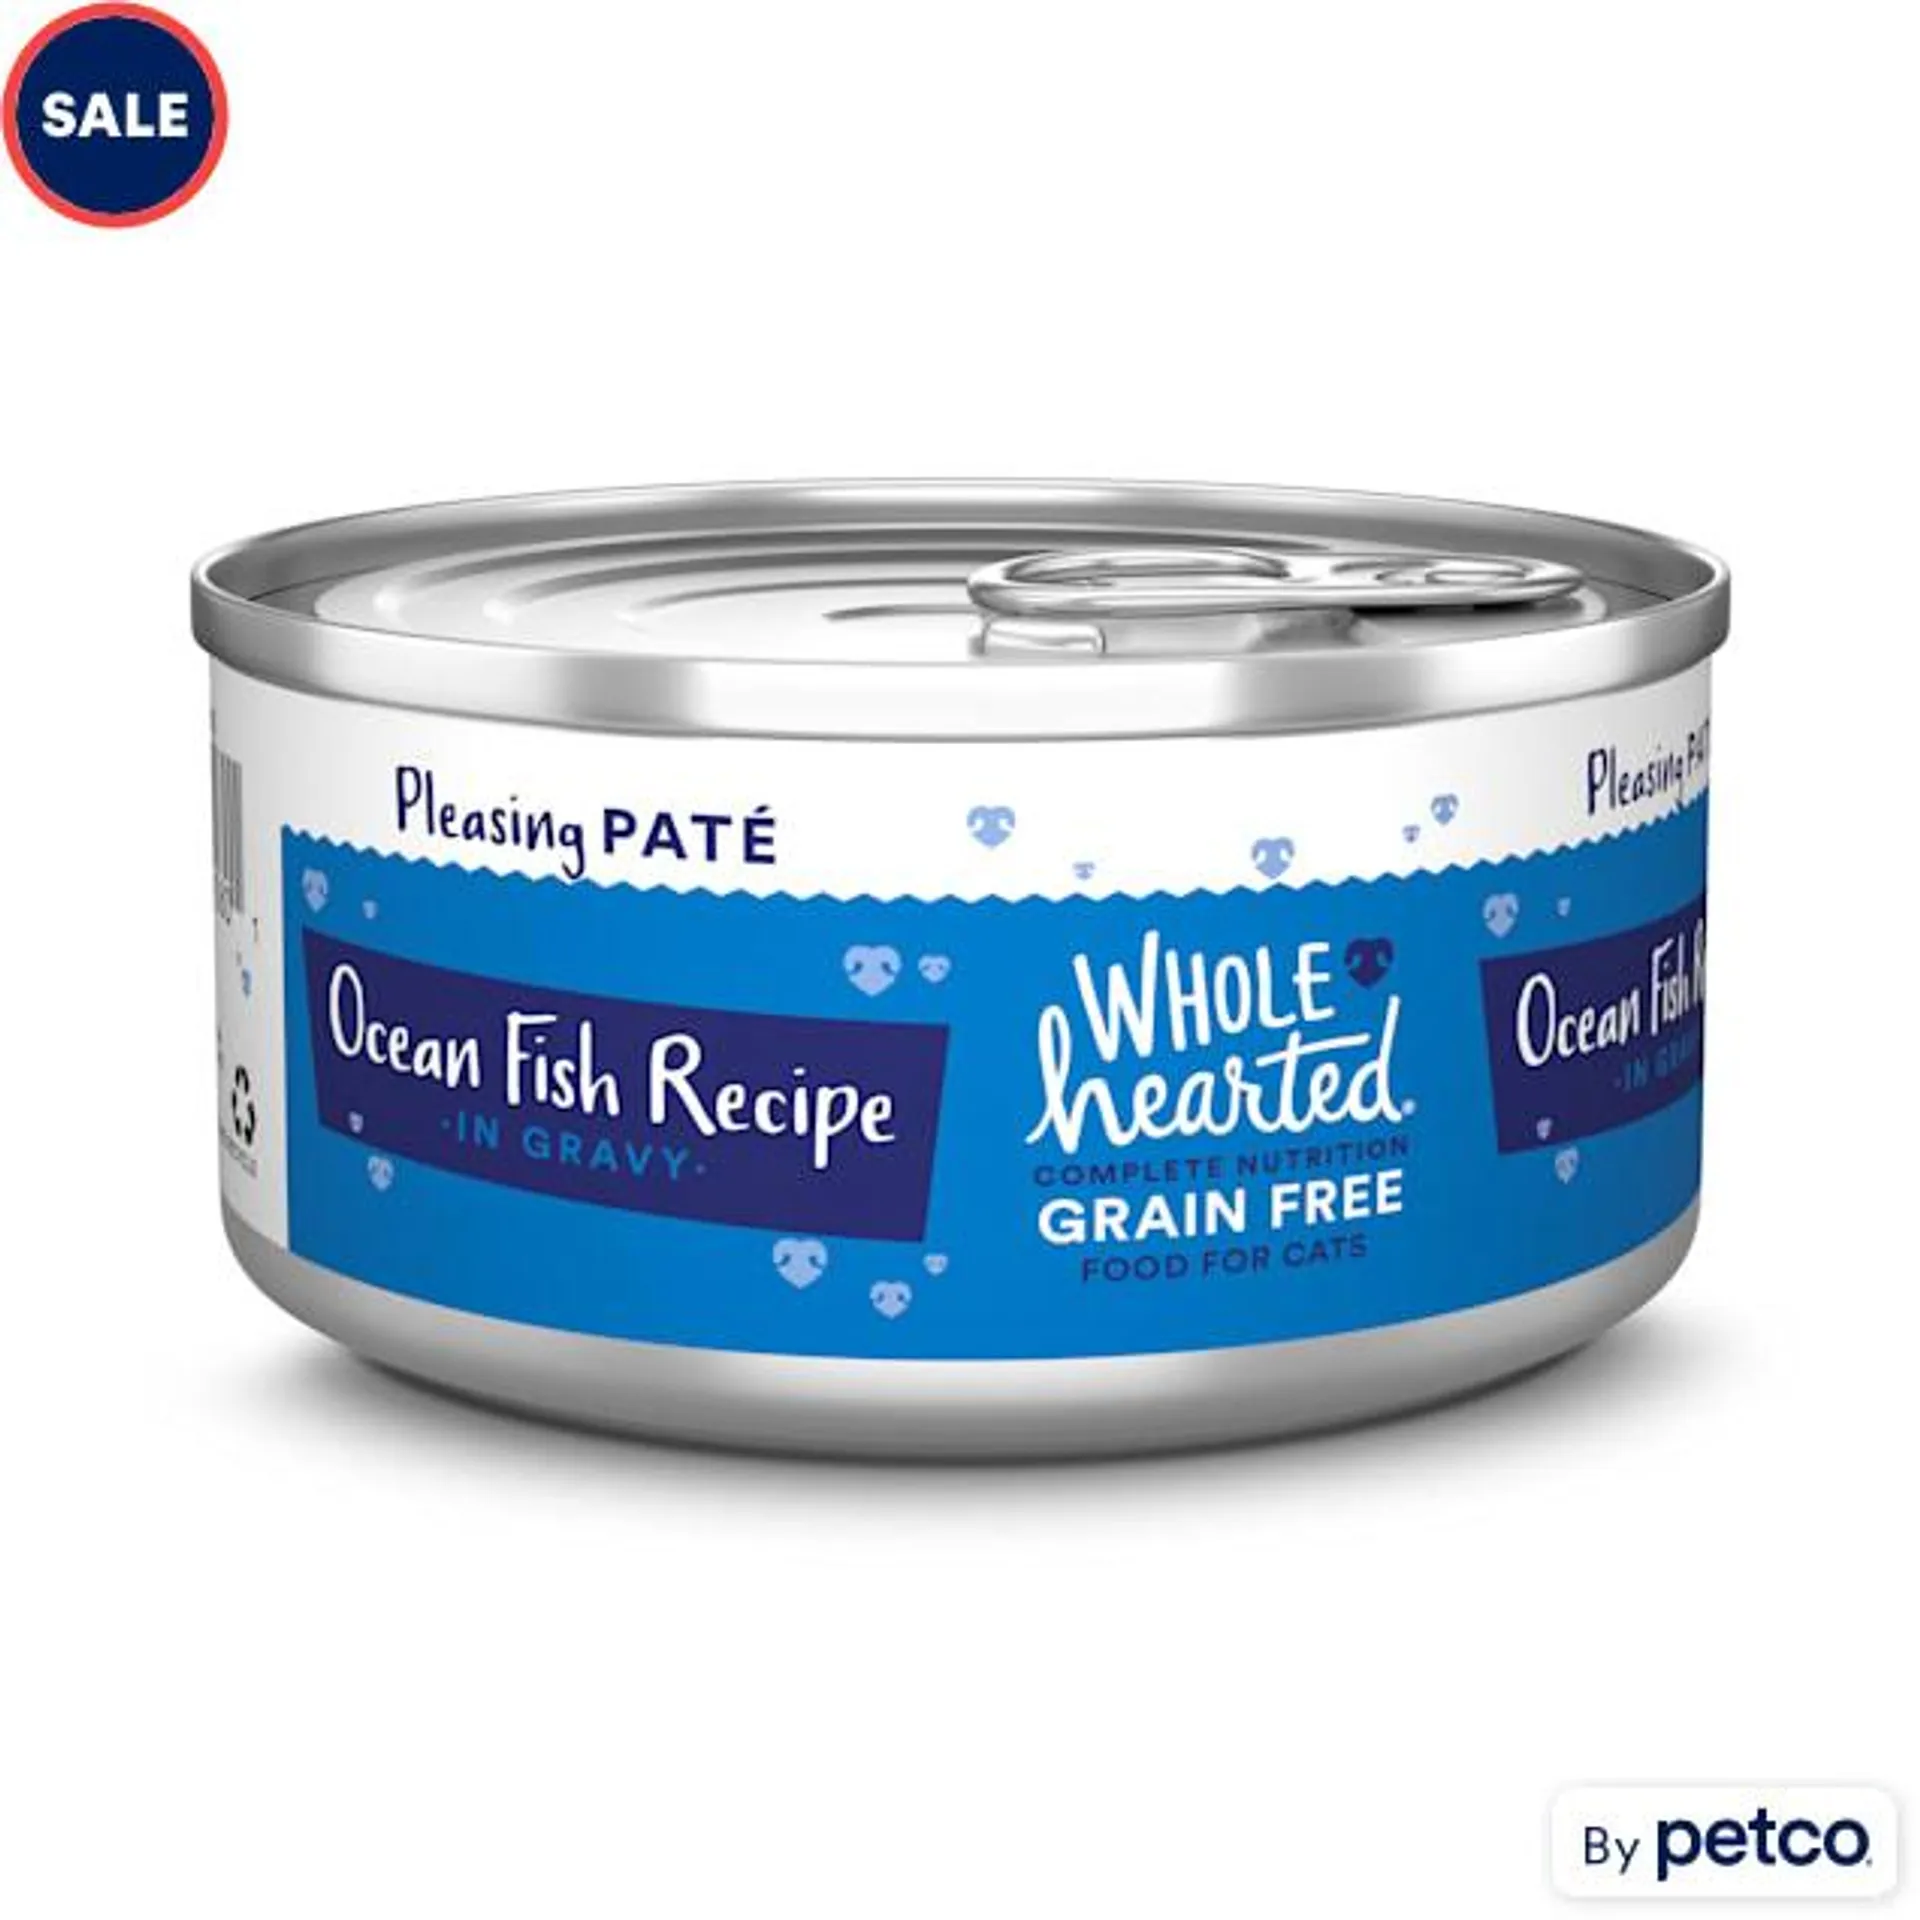 WholeHearted Grain Free Ocean Fish Recipe Pate Adult Wet Cat Food, 5.5 oz., Case of 12